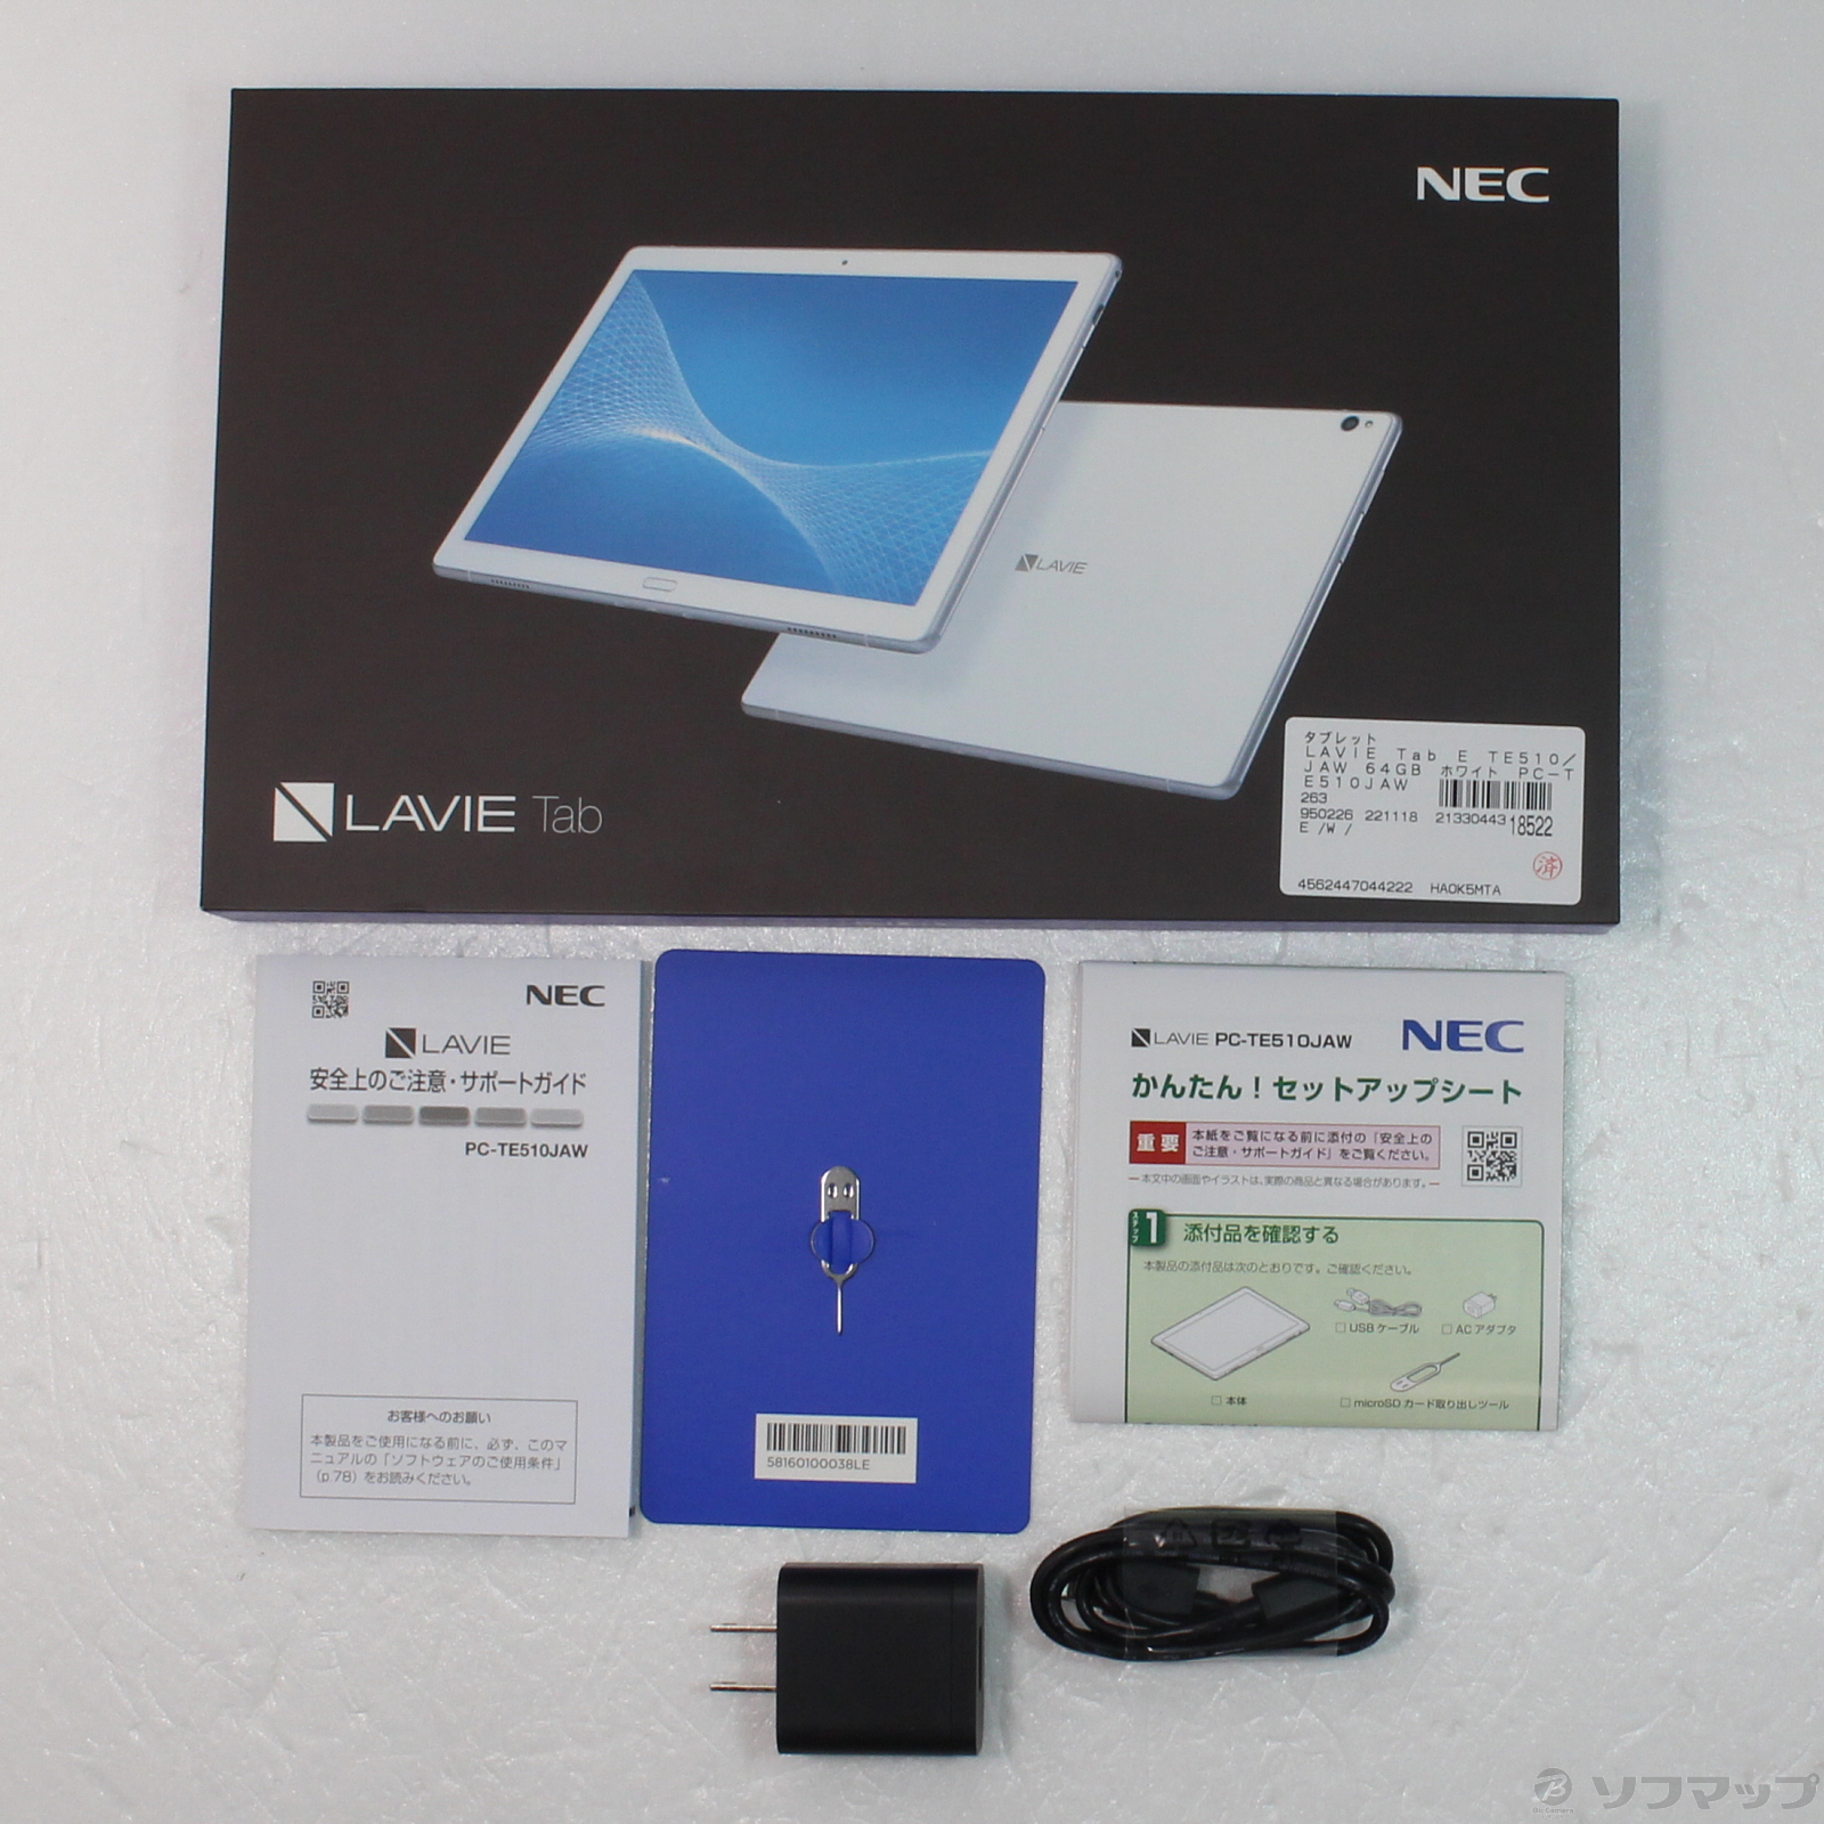 NEC LaVie Tab E PC-TE510JAW